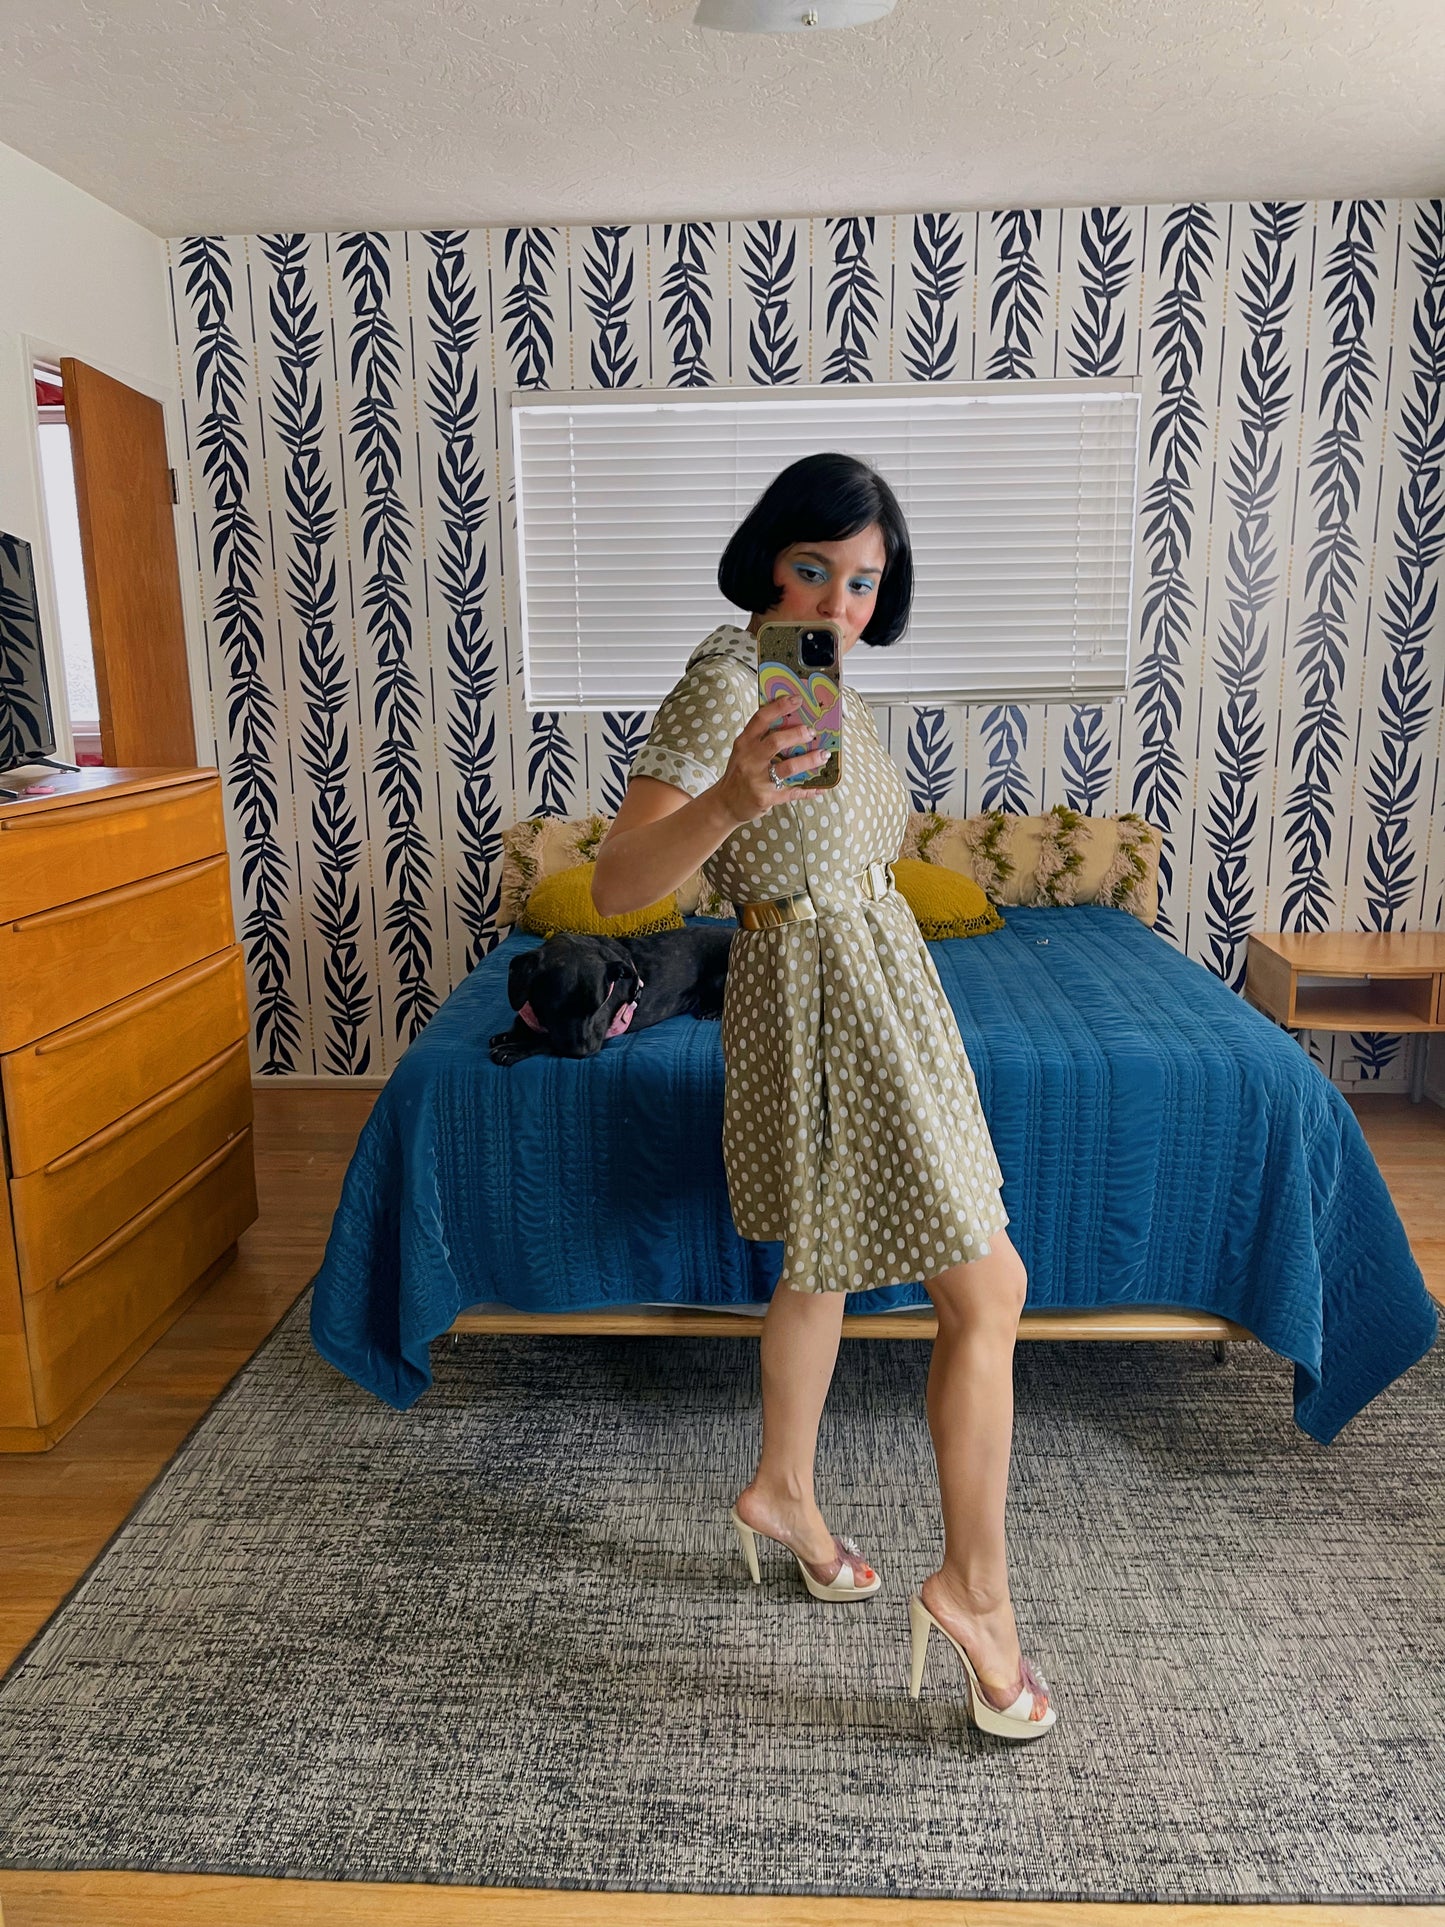 Vintage 60s Polka Dot Fit Flare Raw Silk Dress Fits Sizes XS-SM